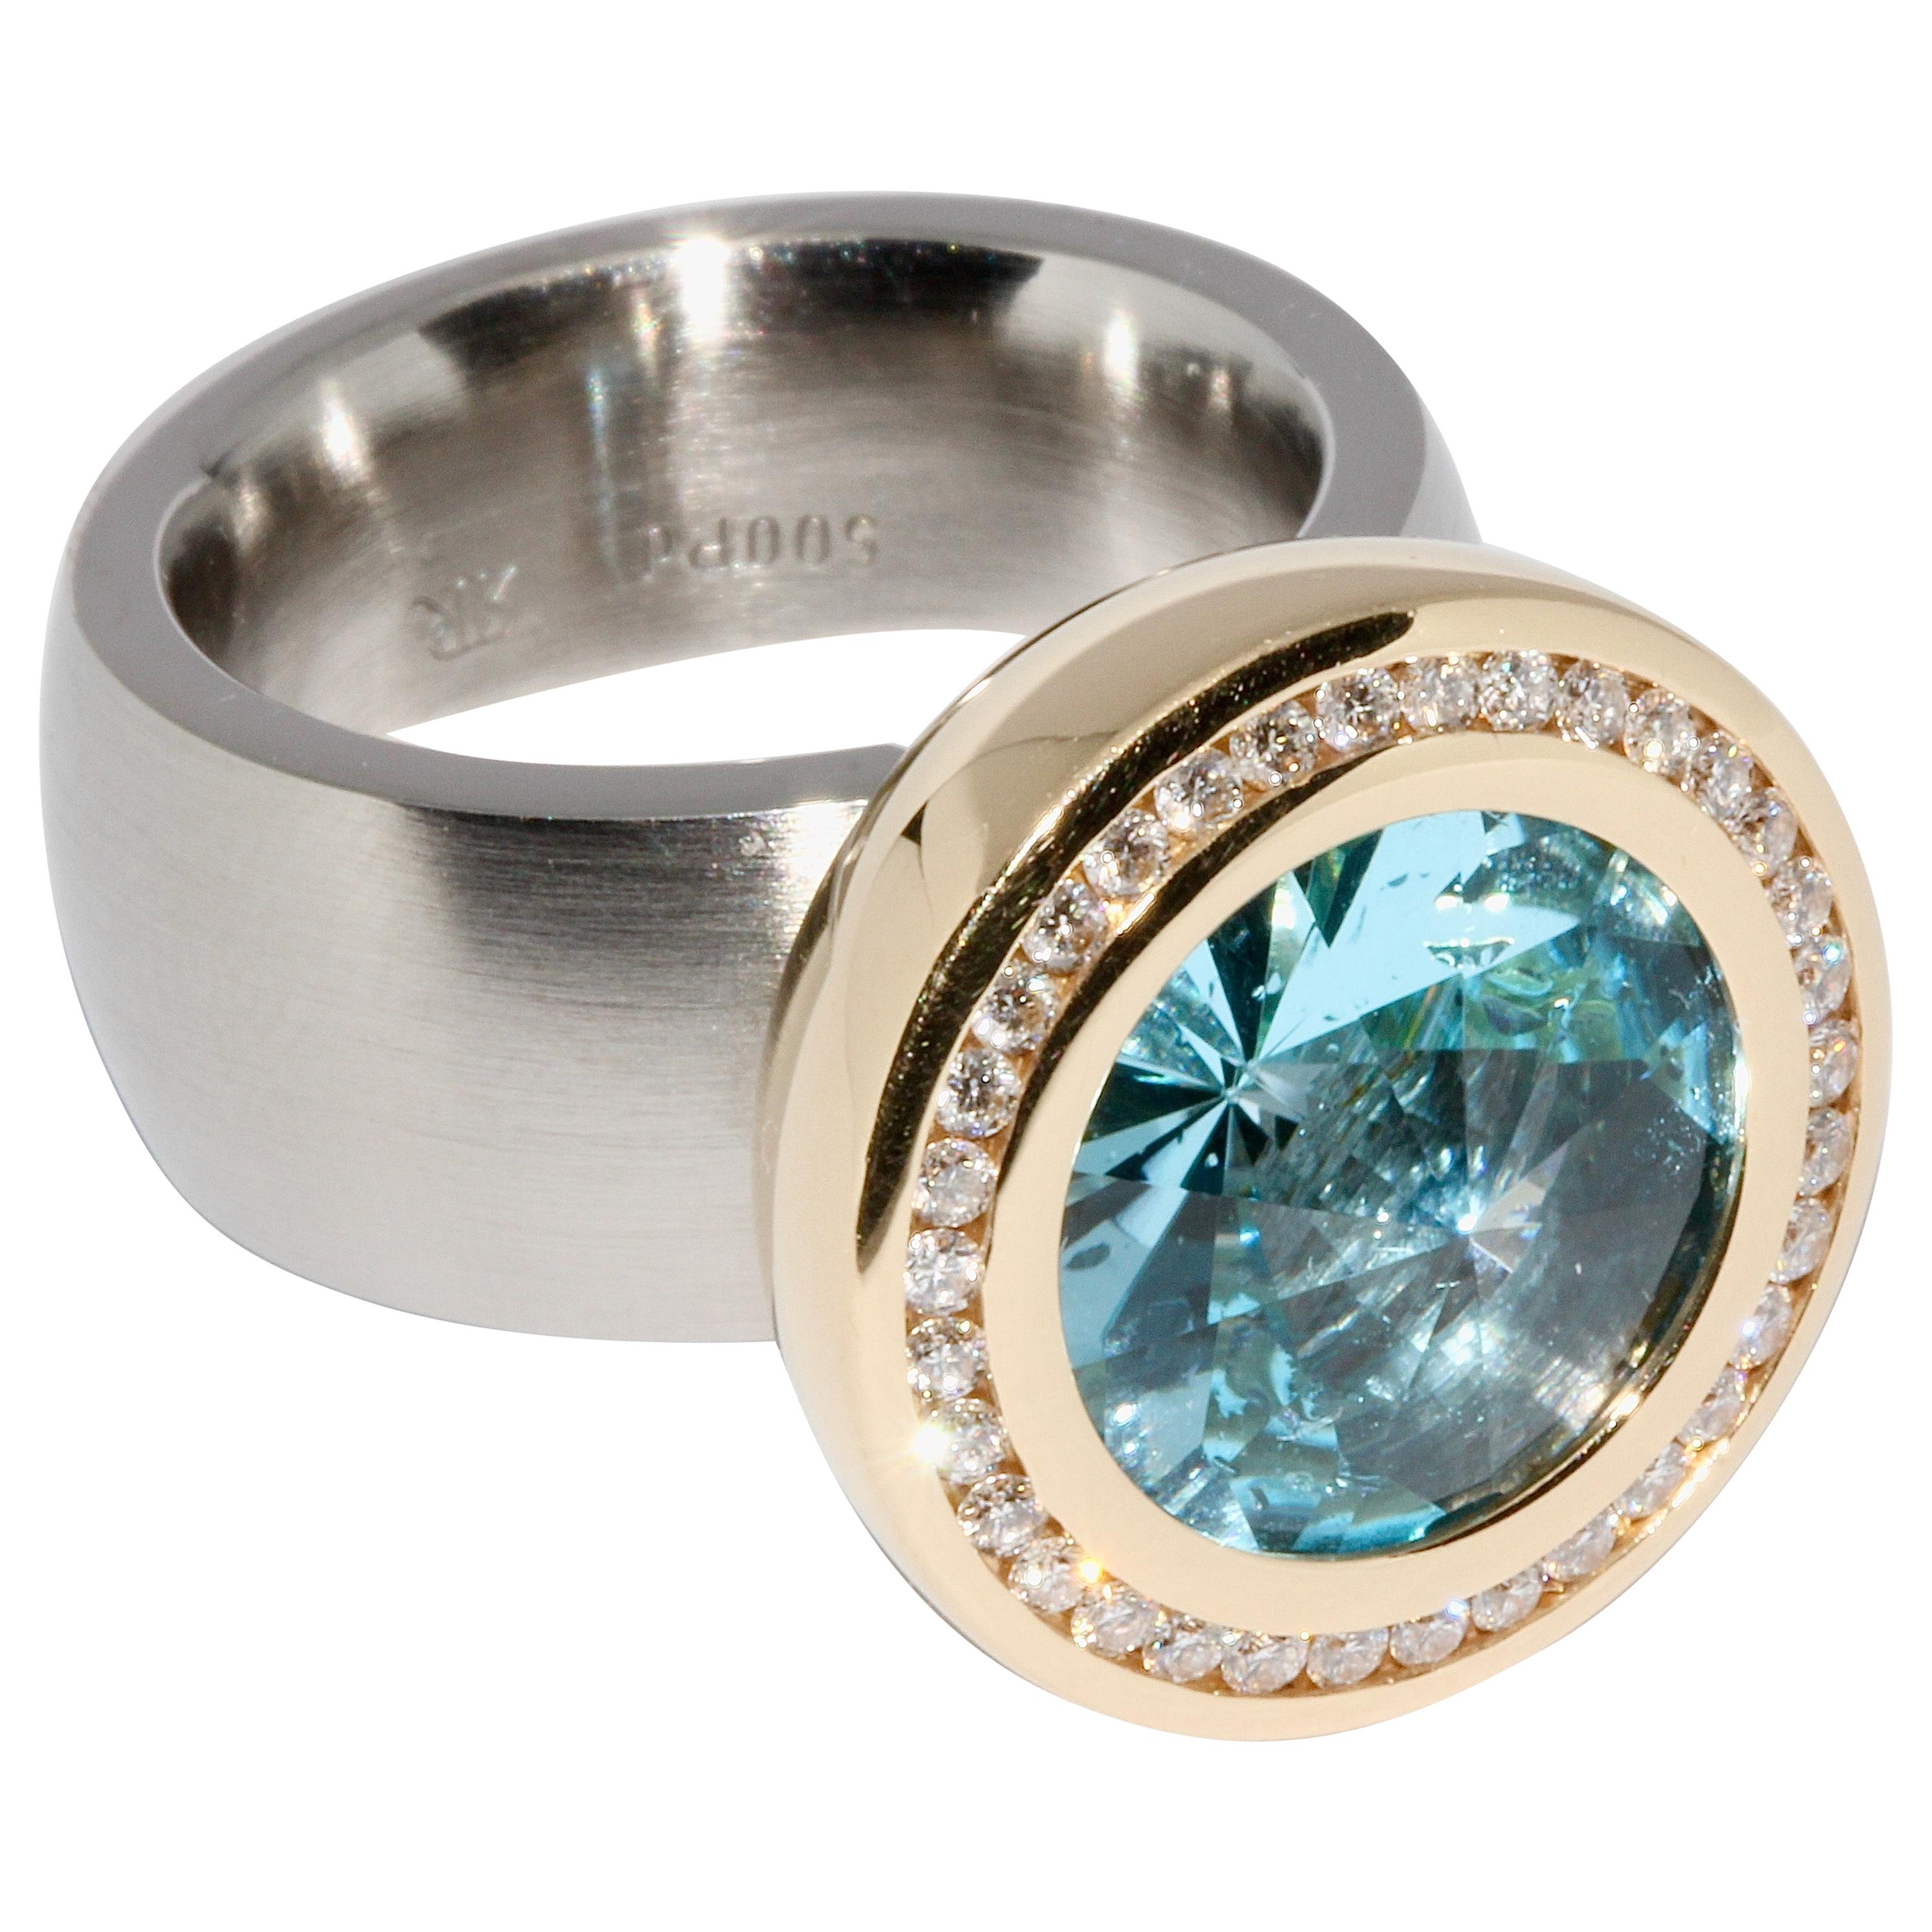 Palladium with 18k Gold, Designer Ring by Rohrbacher, Aquamarine and Diamonds